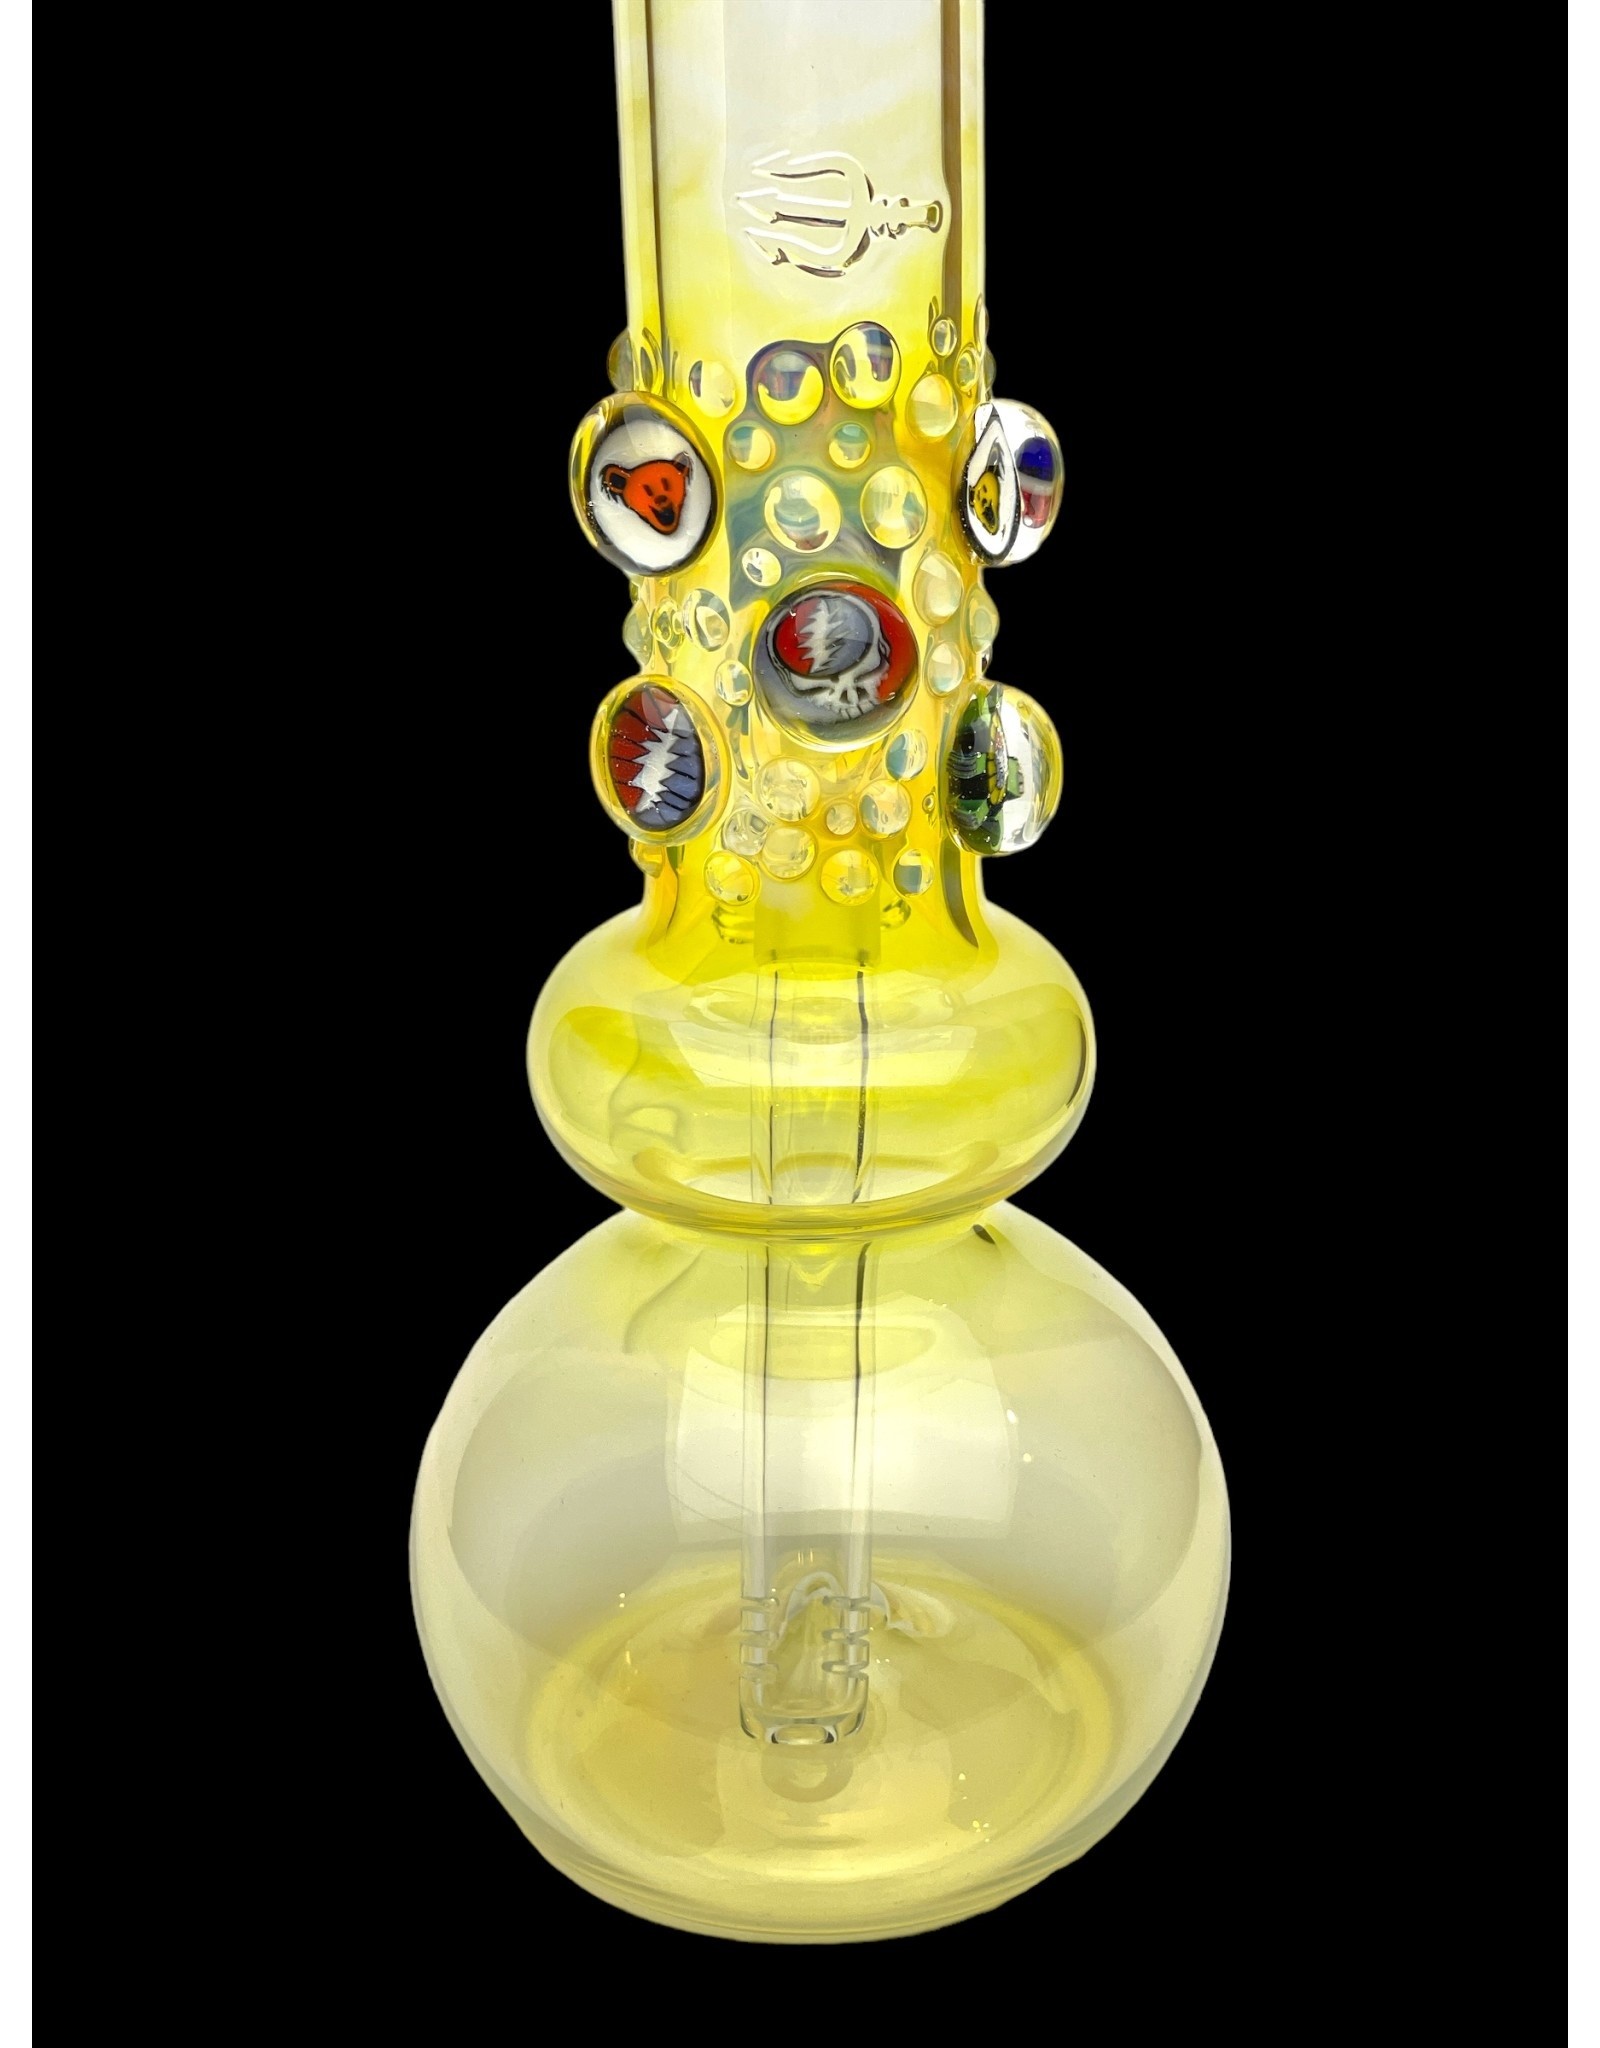 Trident Glass Trident Glass GD Millies Vixen With Art Double Ball 38mm x 4mm 15-17" Tall